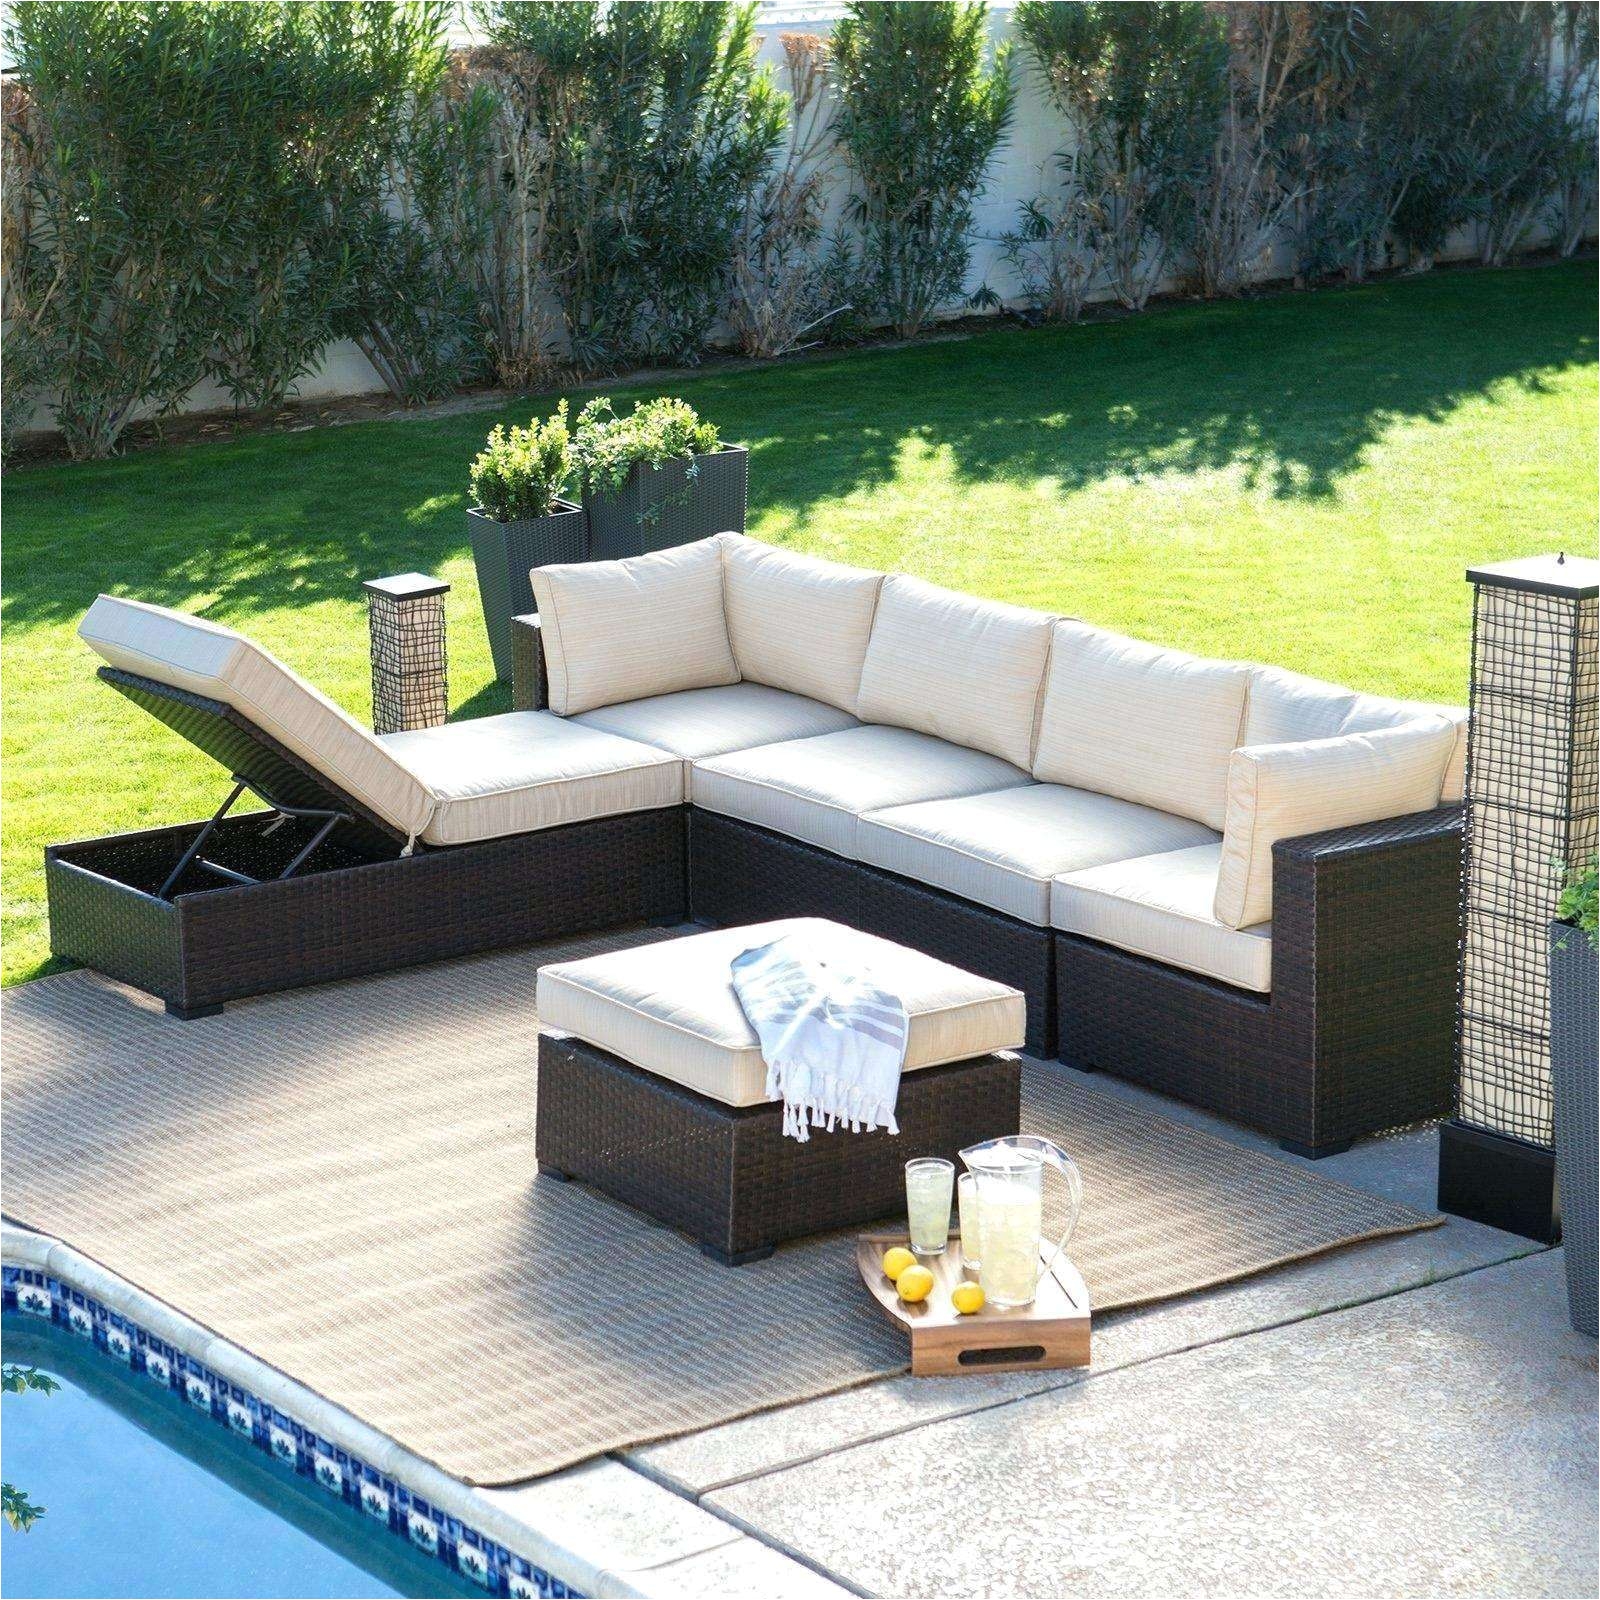 backyard mister diy inspirational diy patio ideas a bud new wicker outdoor sofa 0d patio chairs